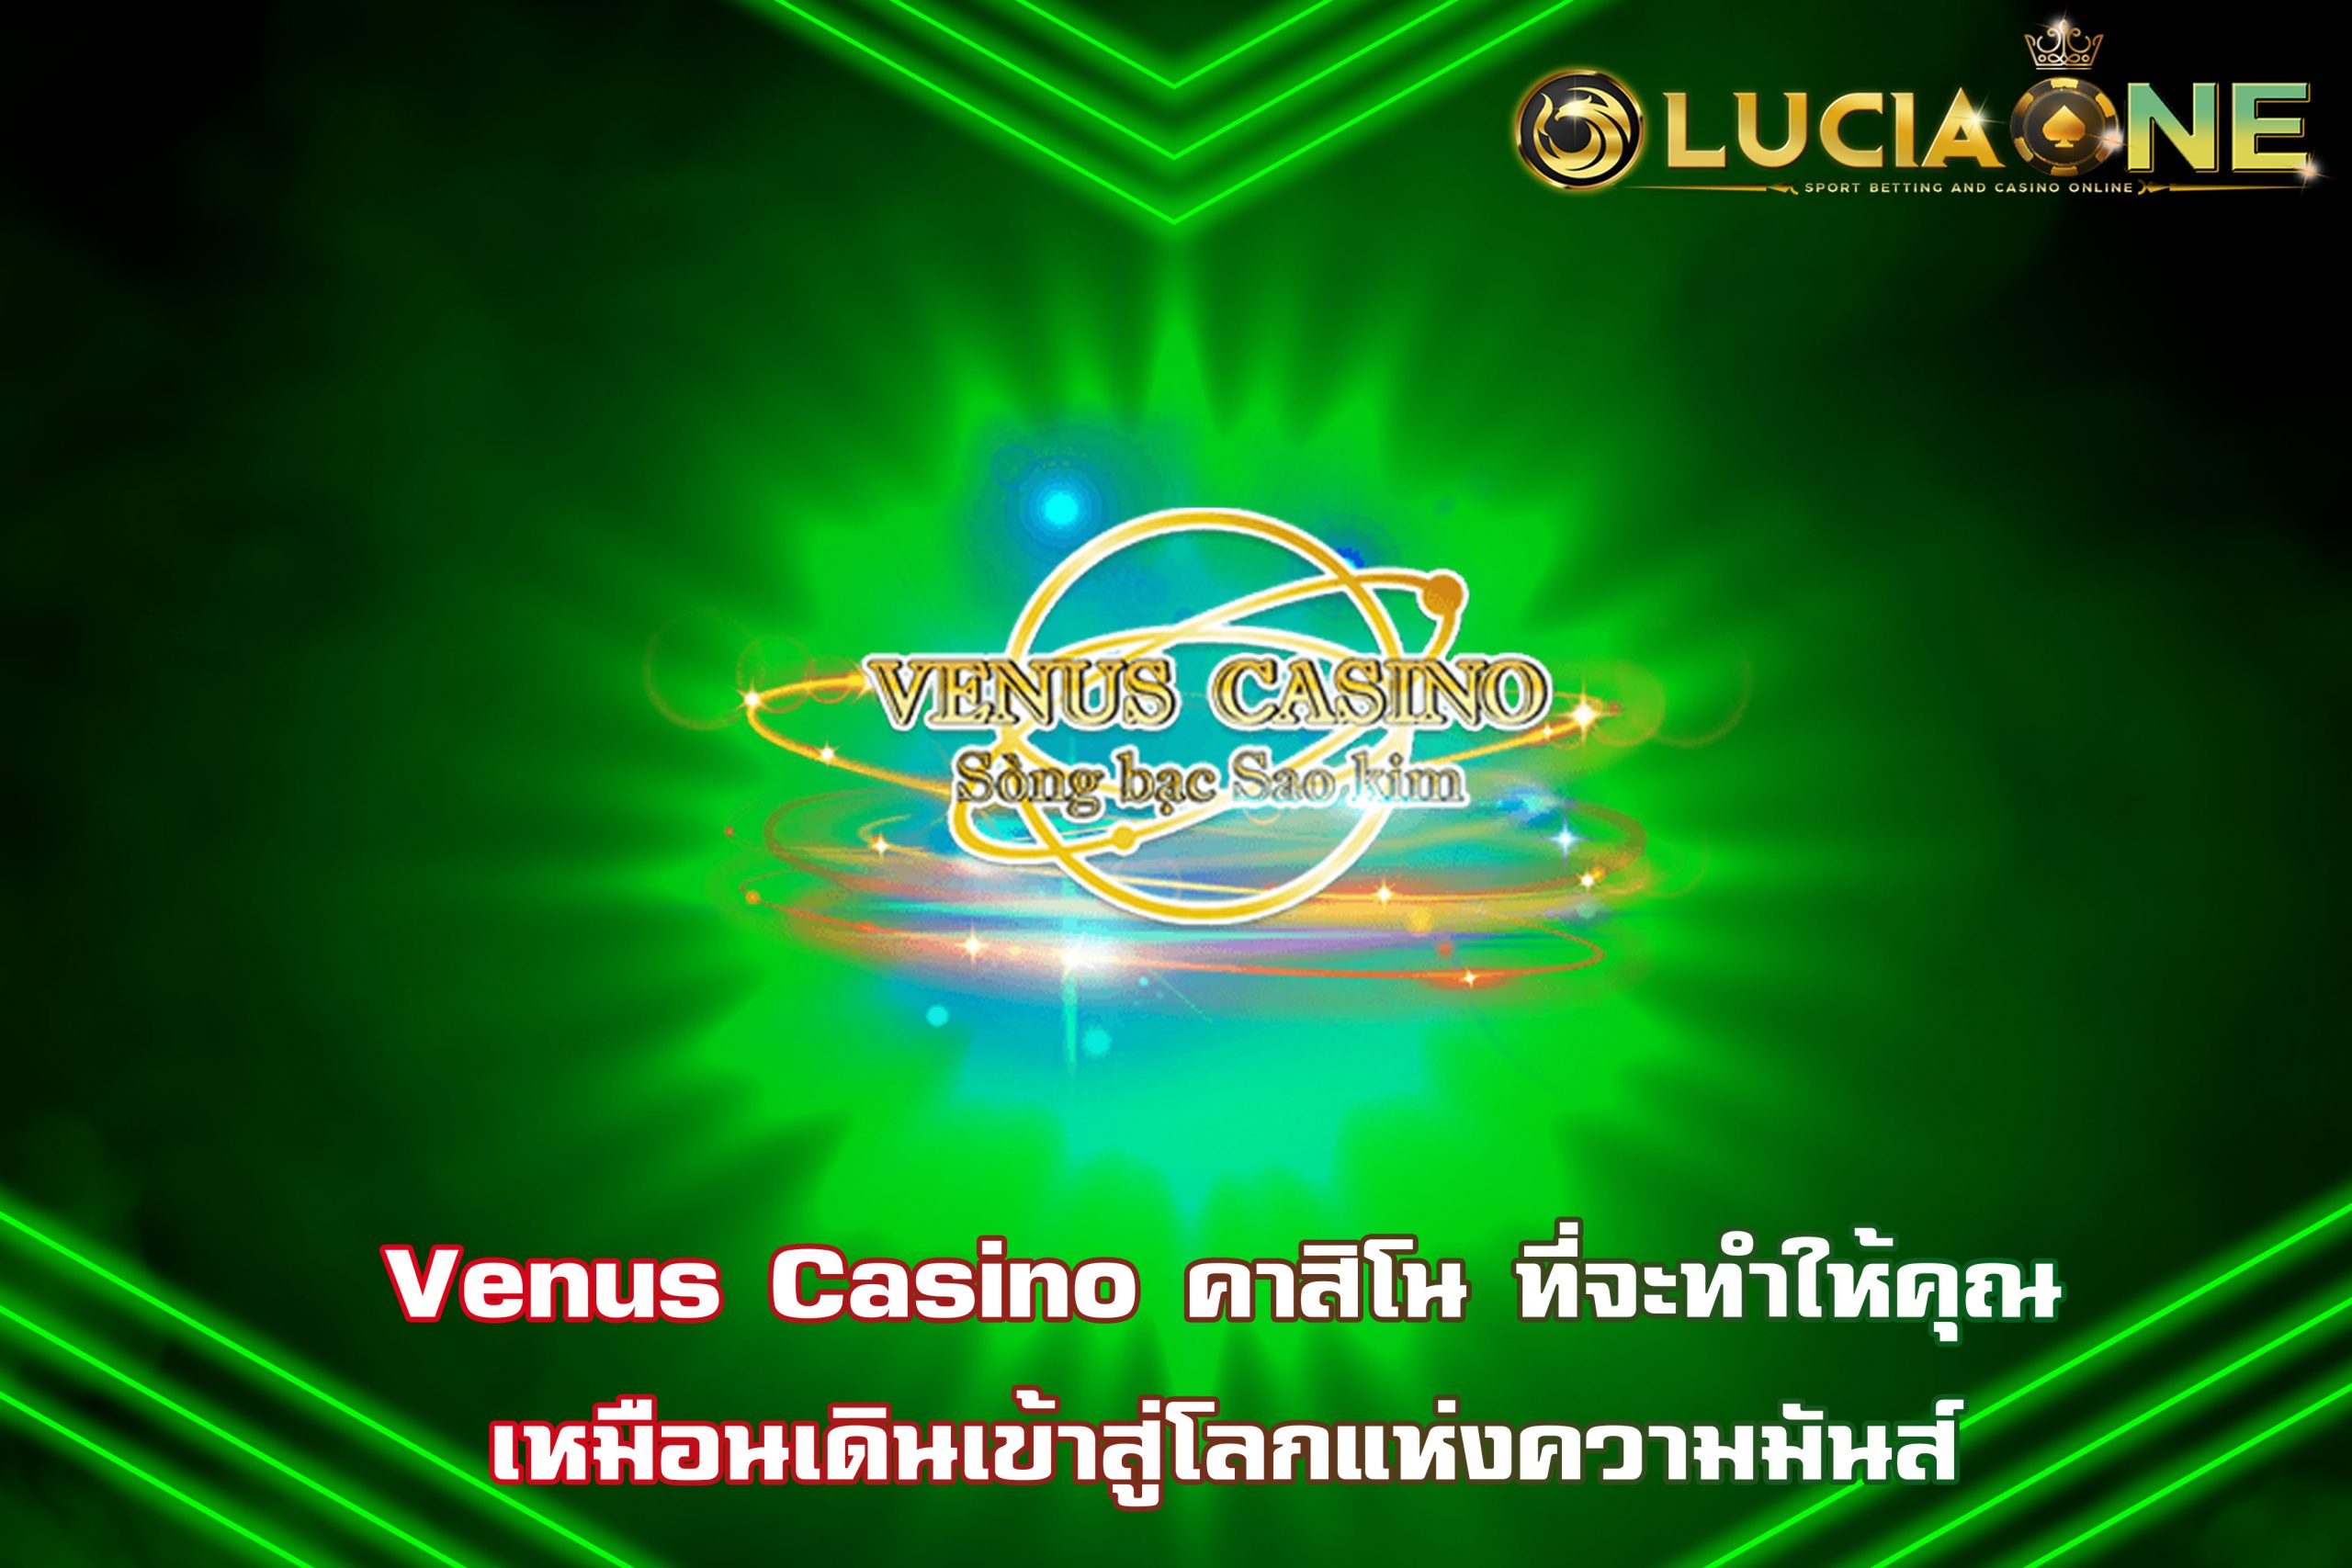 Venus Casino คาสิโน ที่จะทำให้คุณเหมือนเดินเข้าสู่โลกแห่งความมันส์